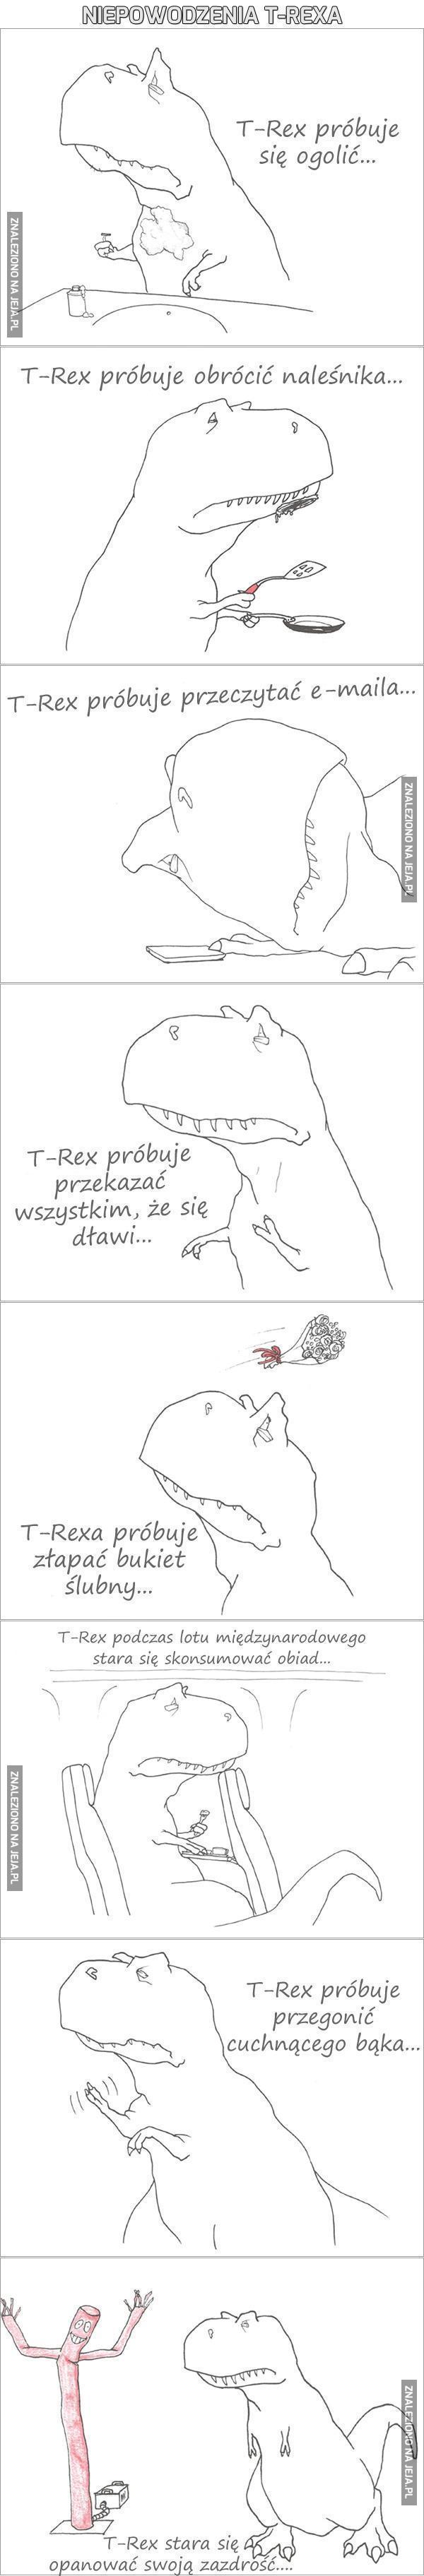 Niepowodzenia T-Rexa